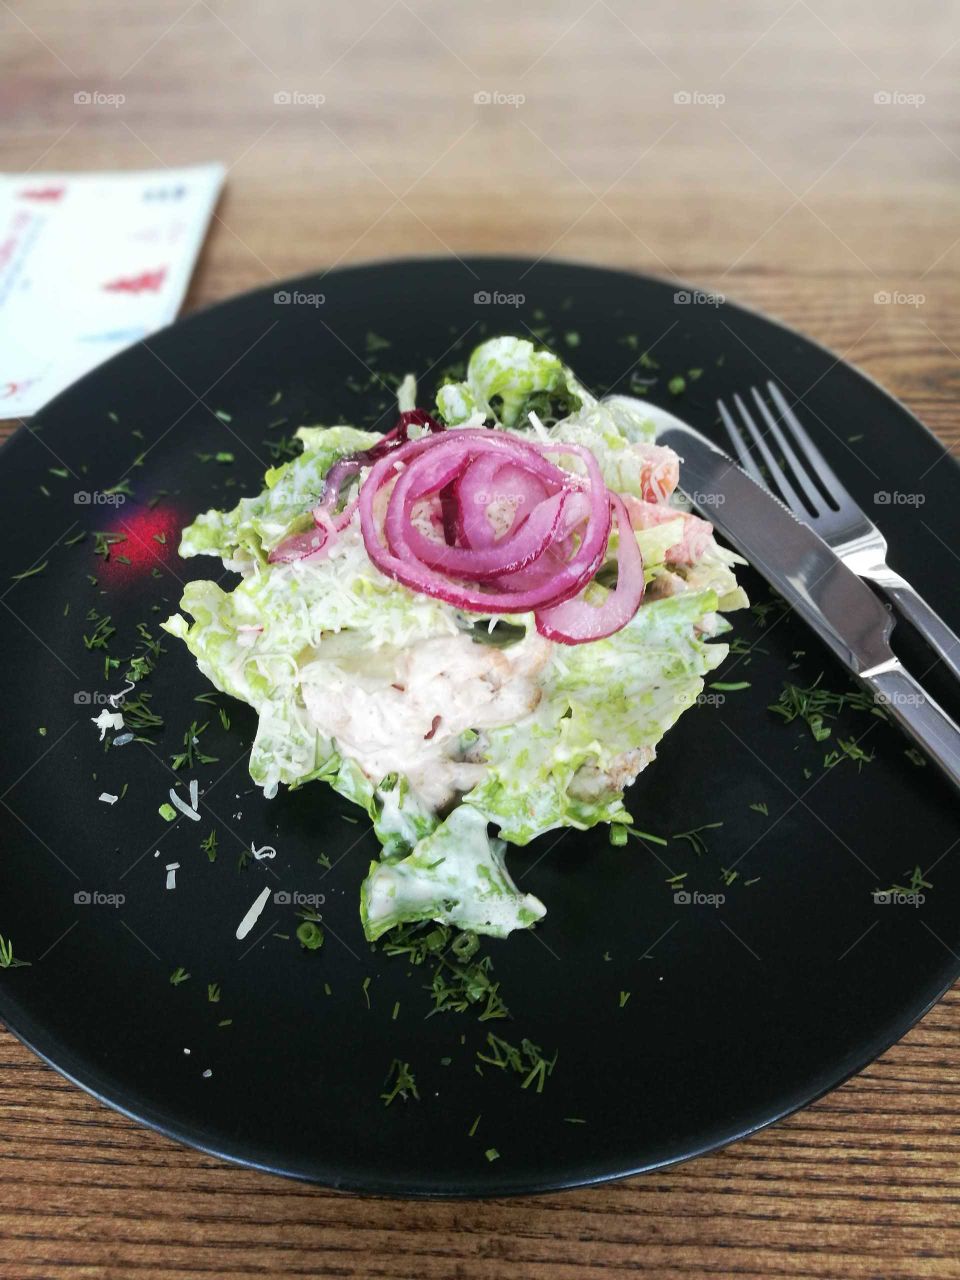 My best salad yet